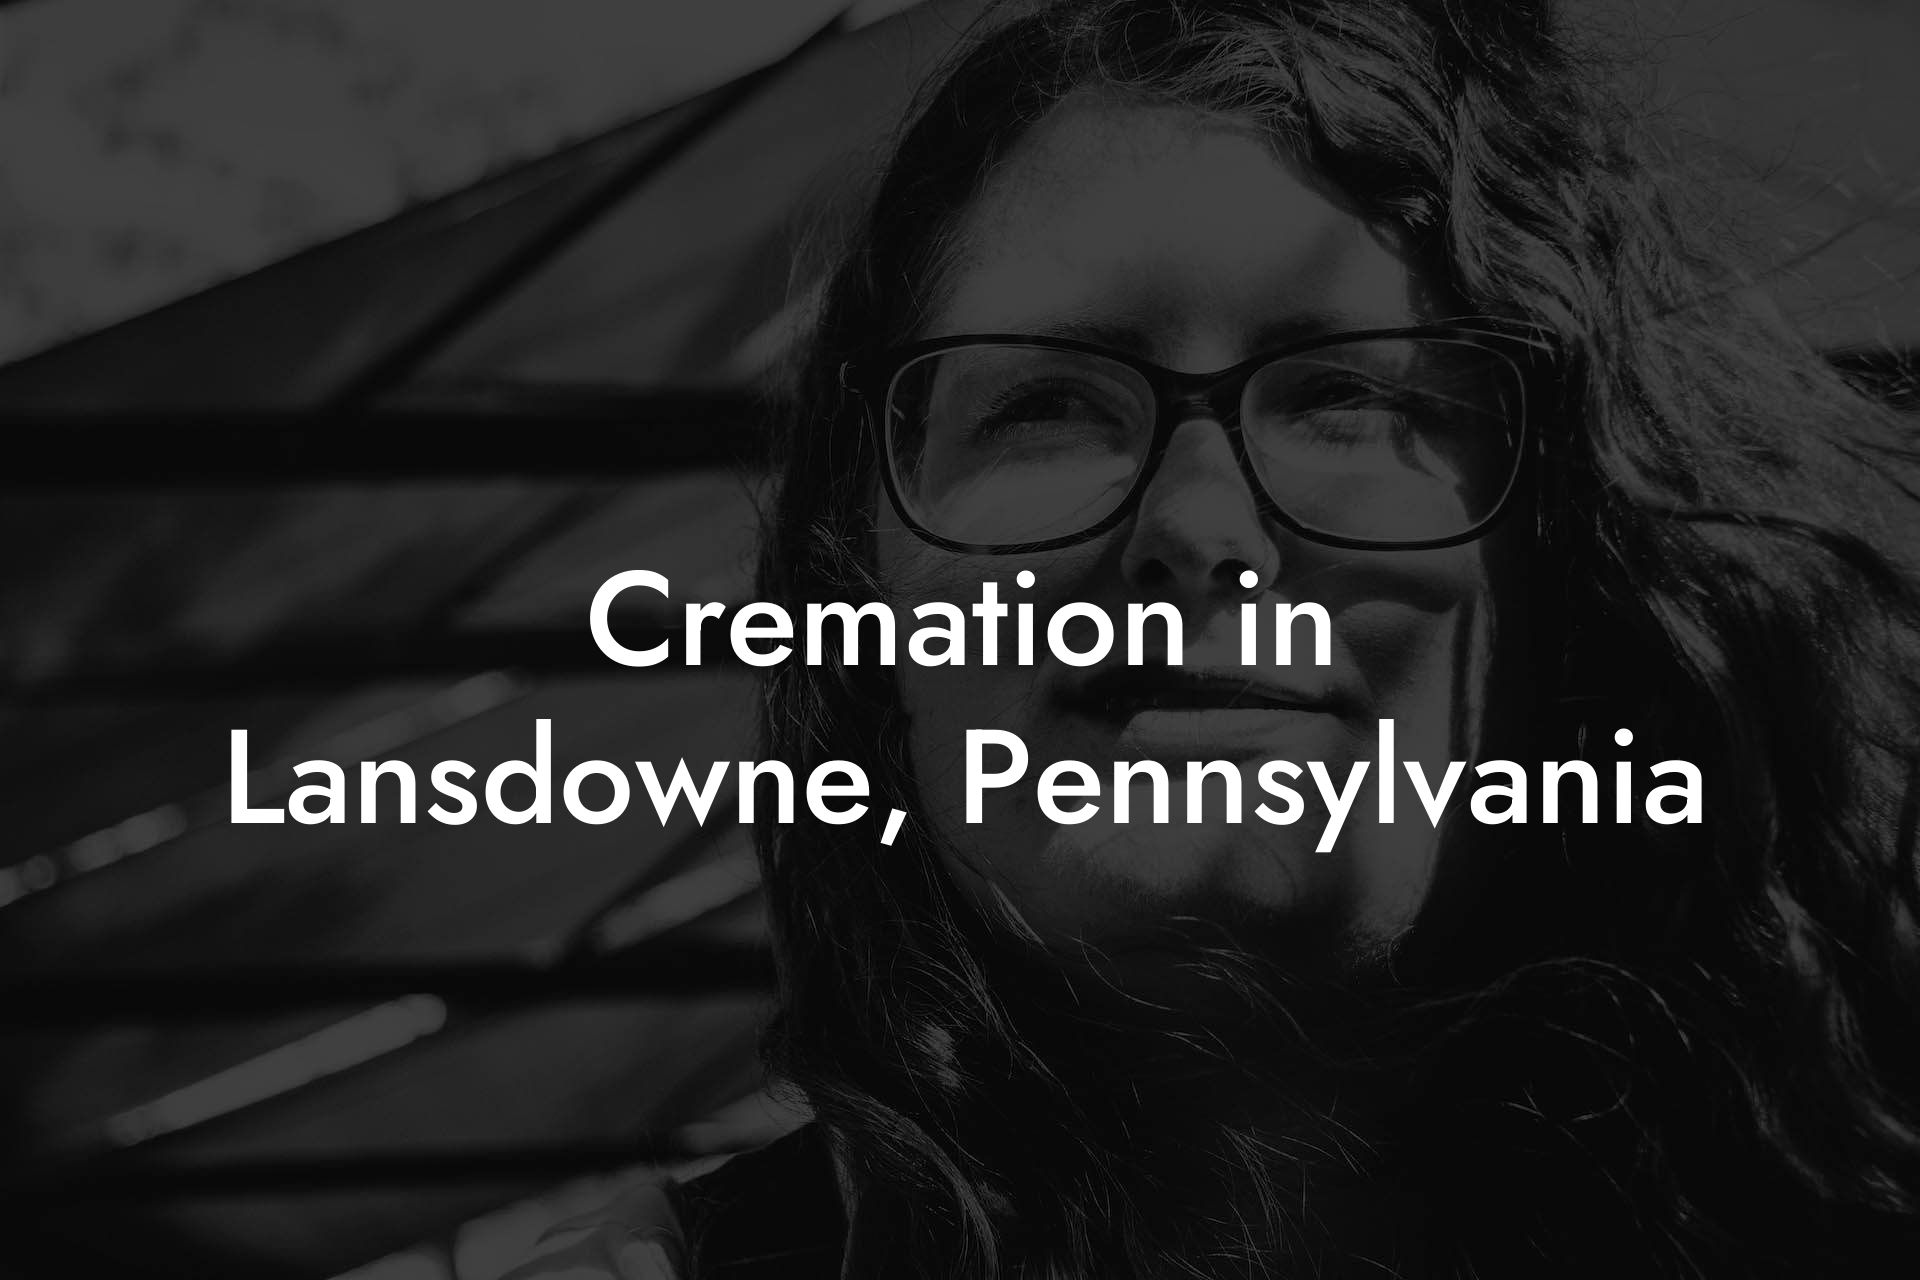 Cremation in Lansdowne, Pennsylvania